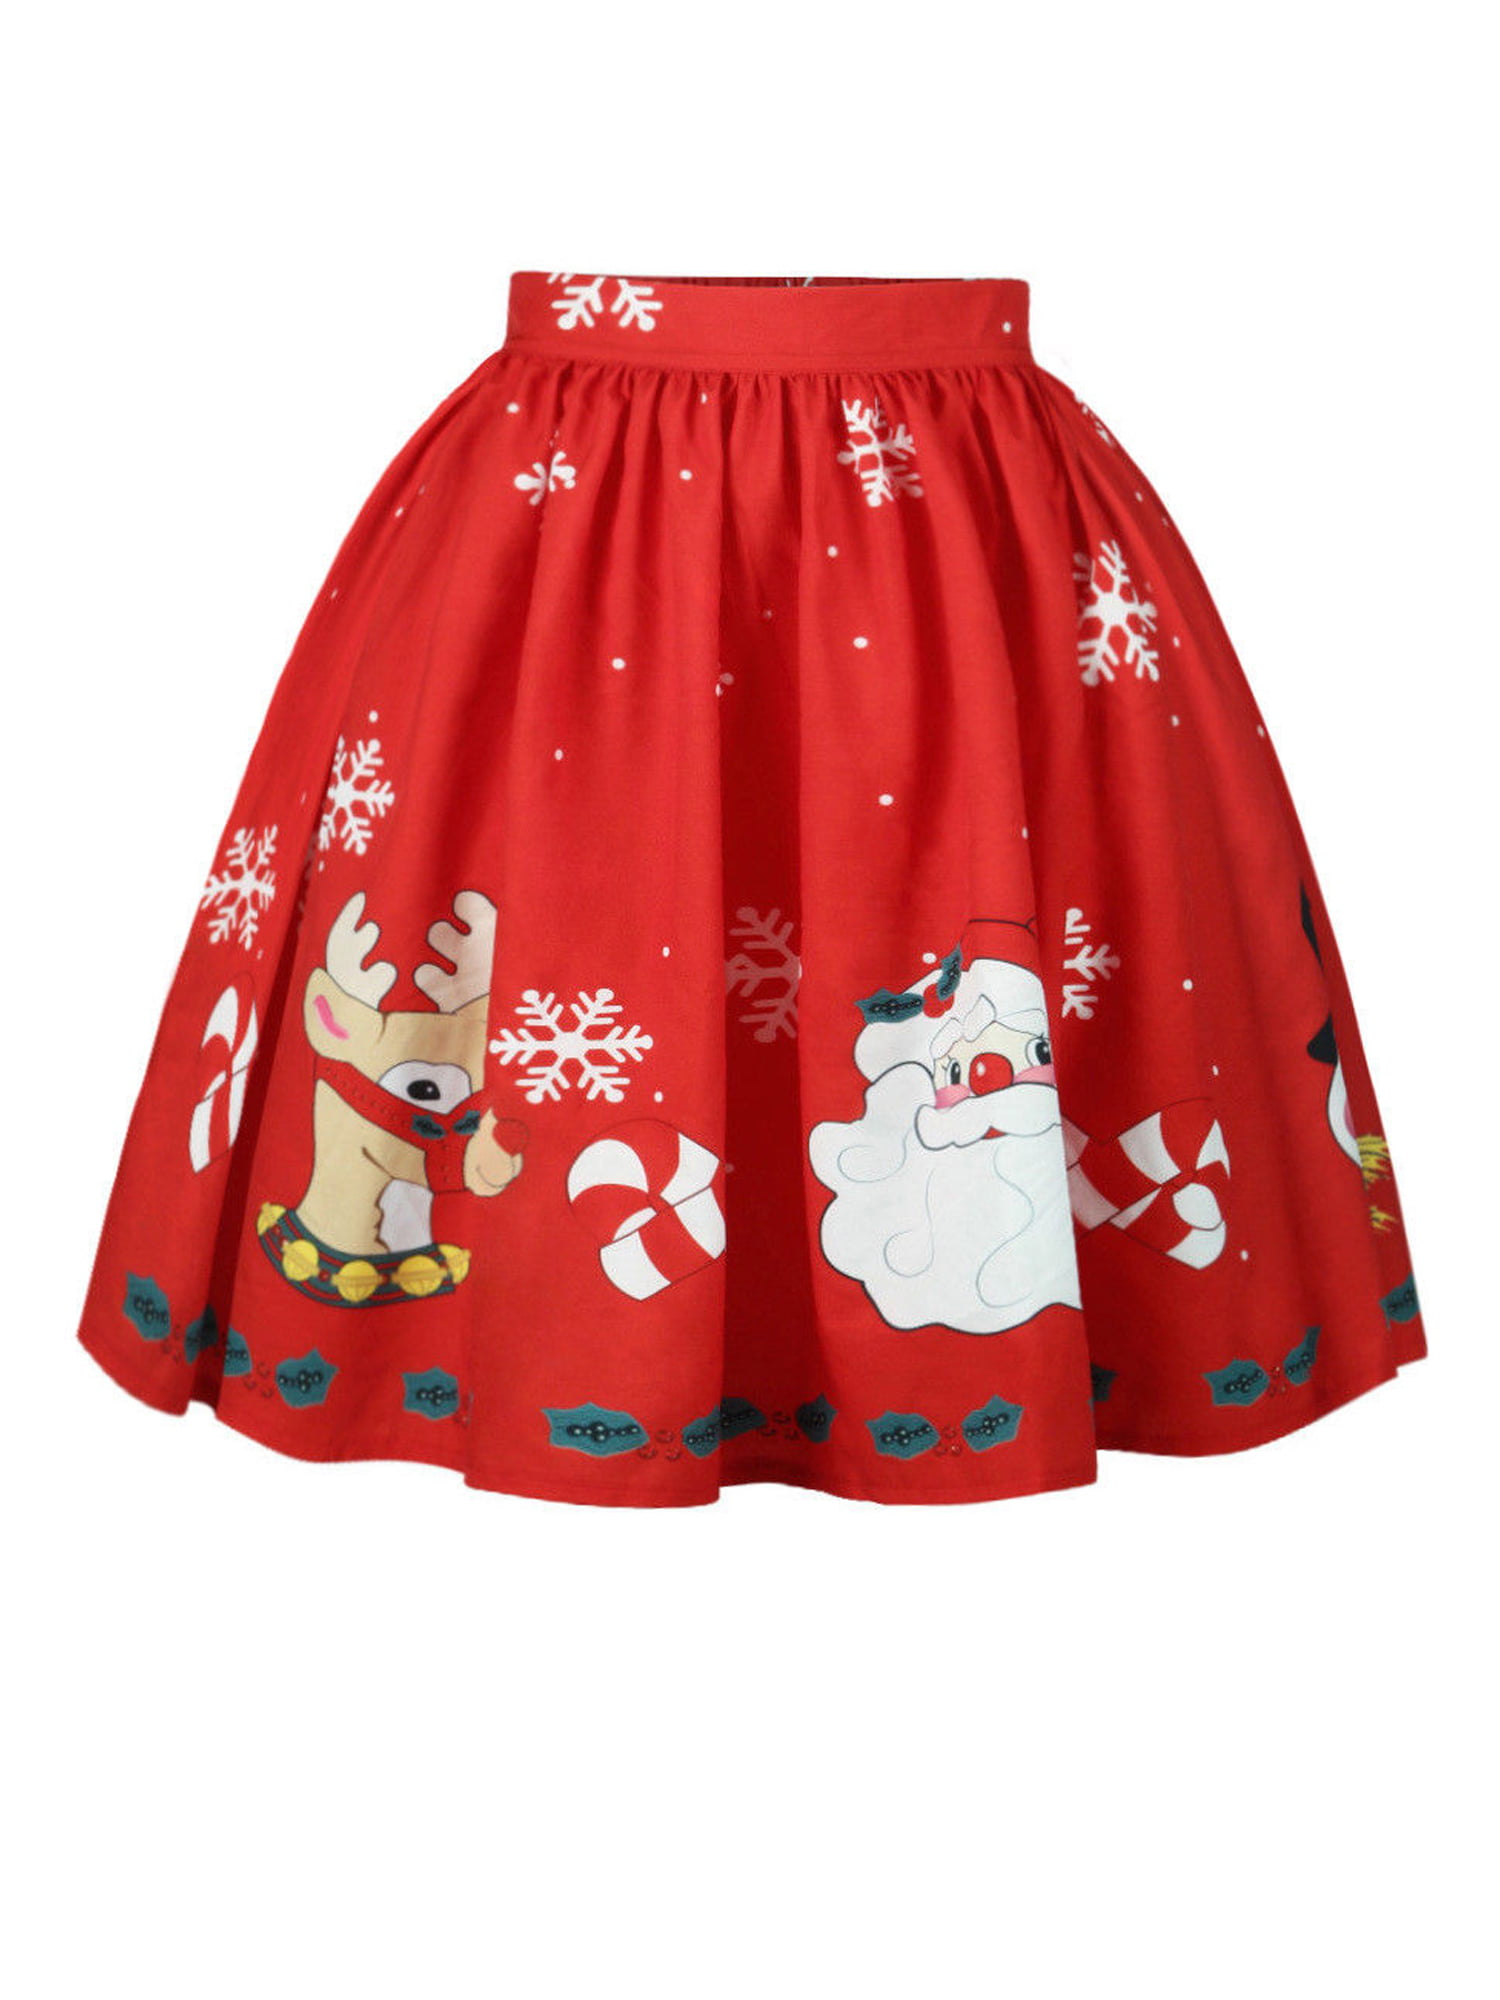 Christmas Print GIrls Flared Skirt Skater Pleated A-line XMAS Santa Claus Skirts 